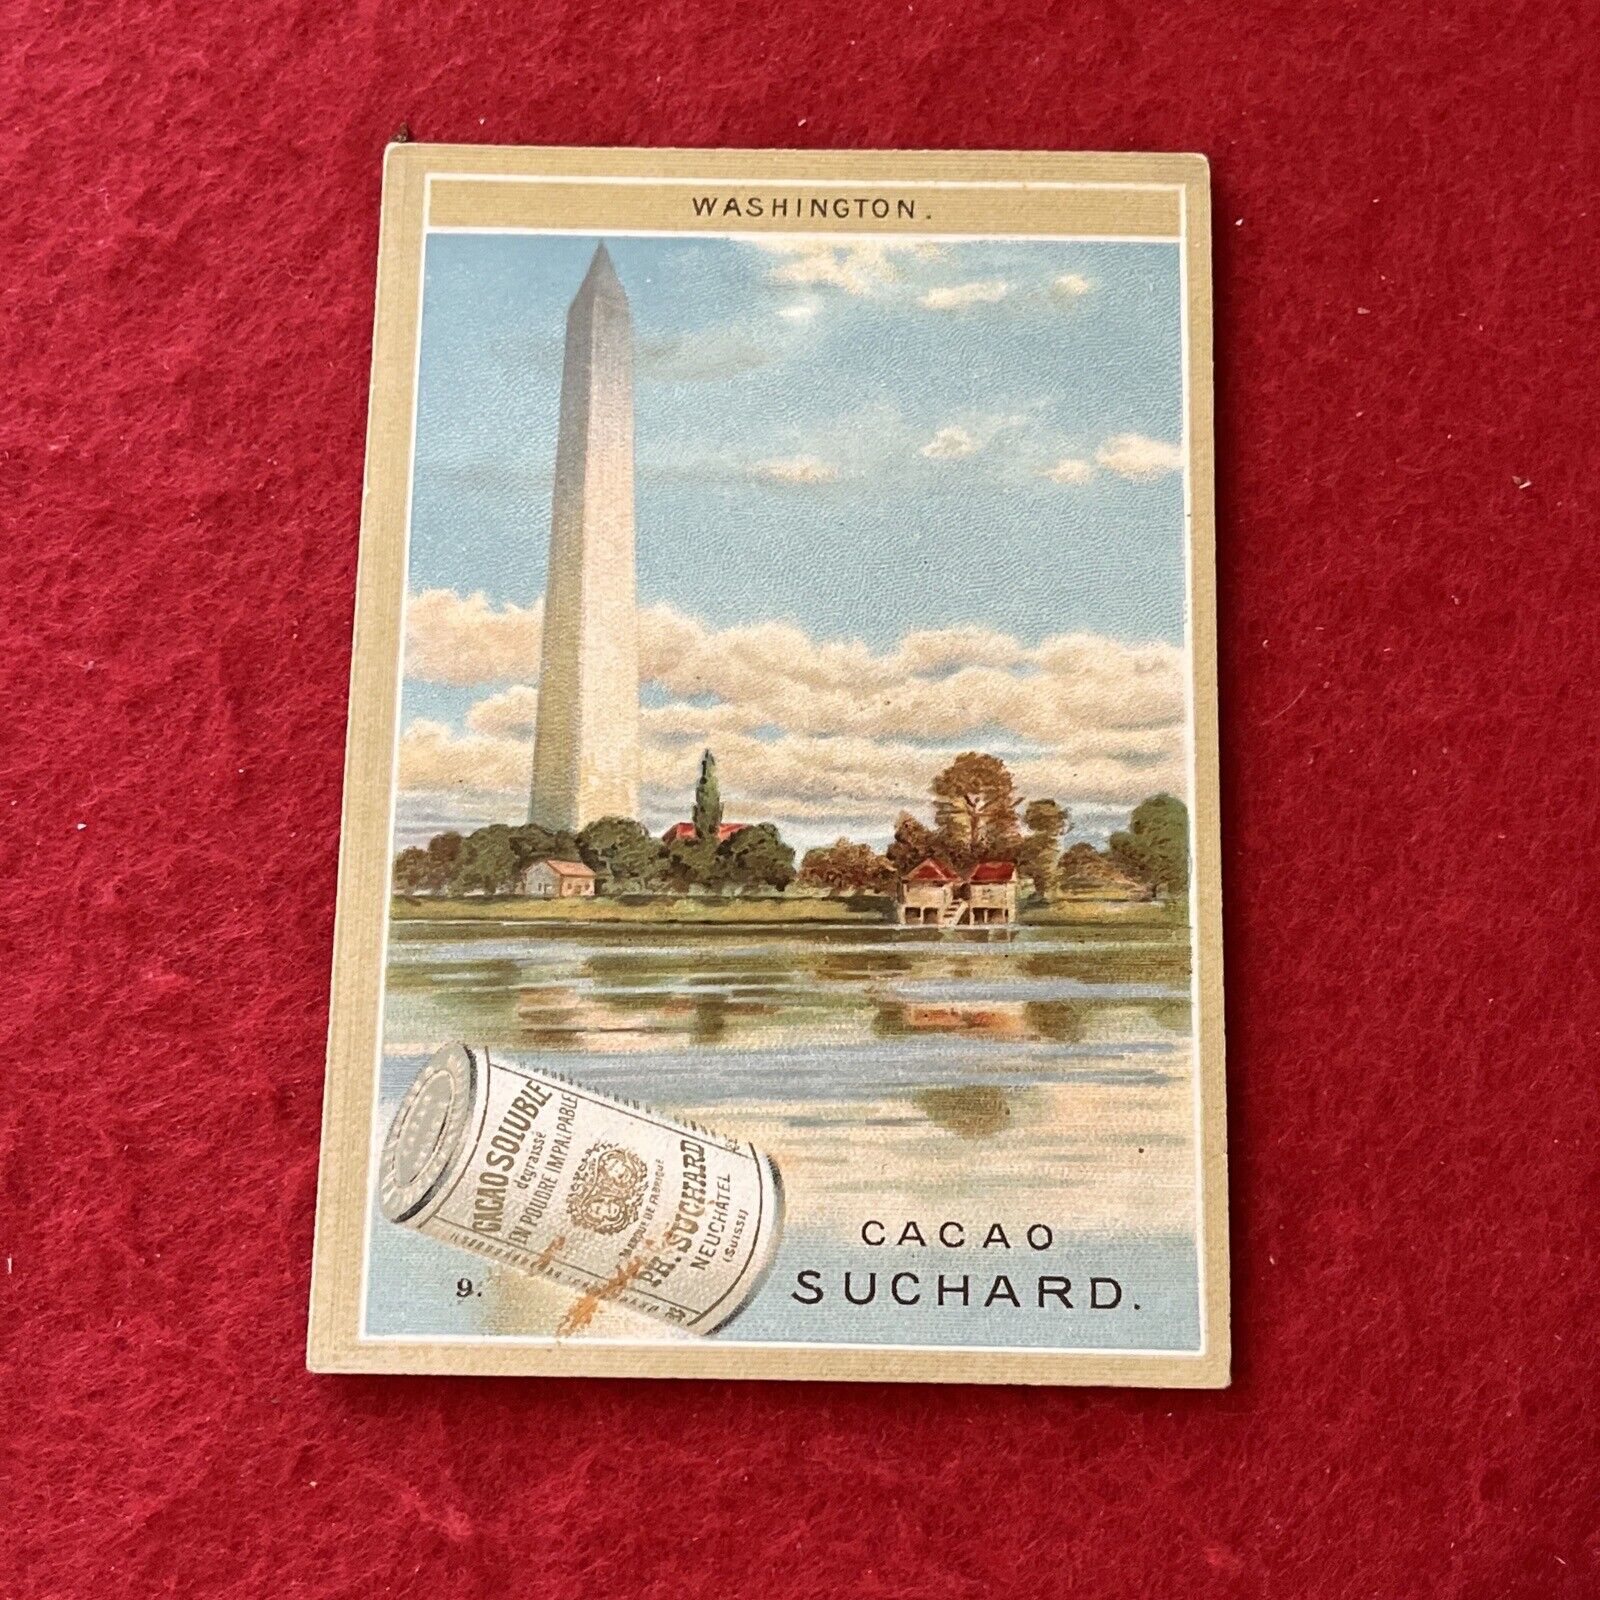 Late 1800s Early 1900s Era Fabrique De Chocolat WASHINGTON MONUMENT Advert Card